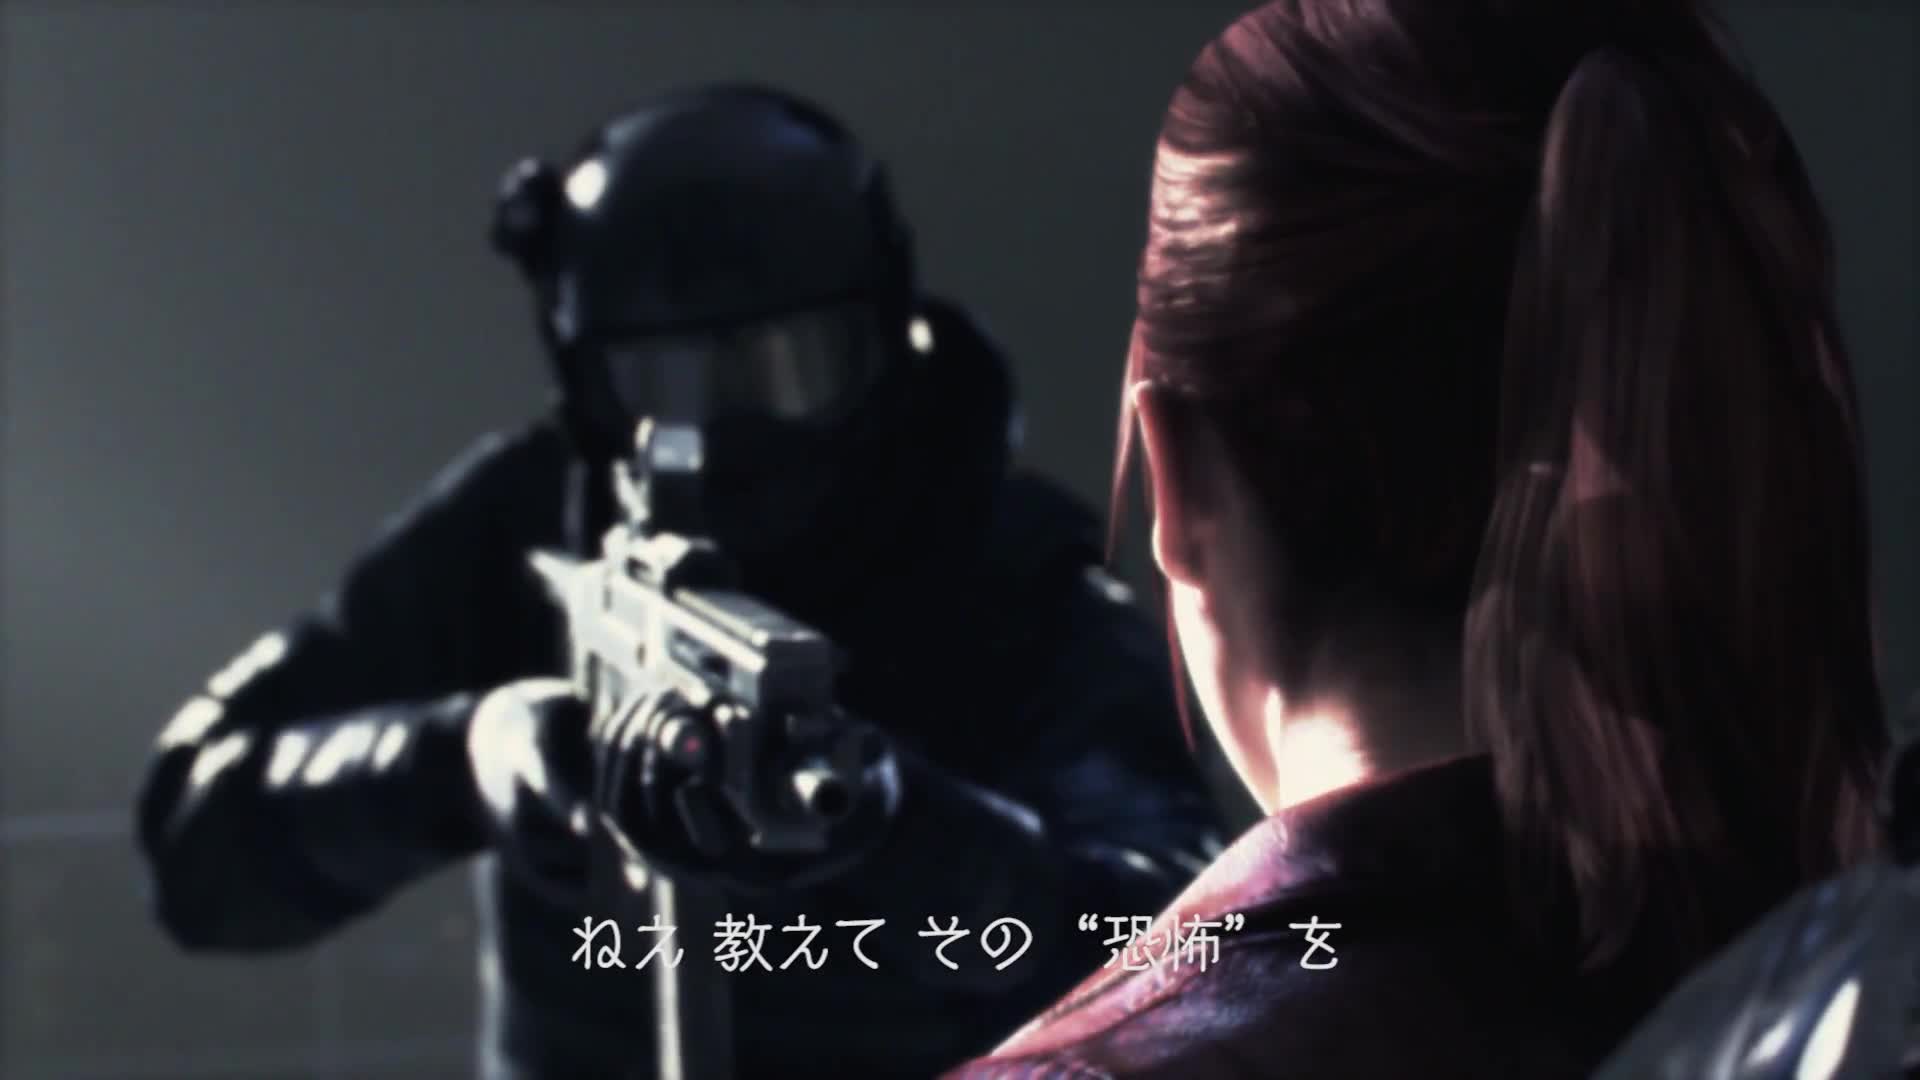 Resident Evil: Revelations 2 - Switch overview trailer